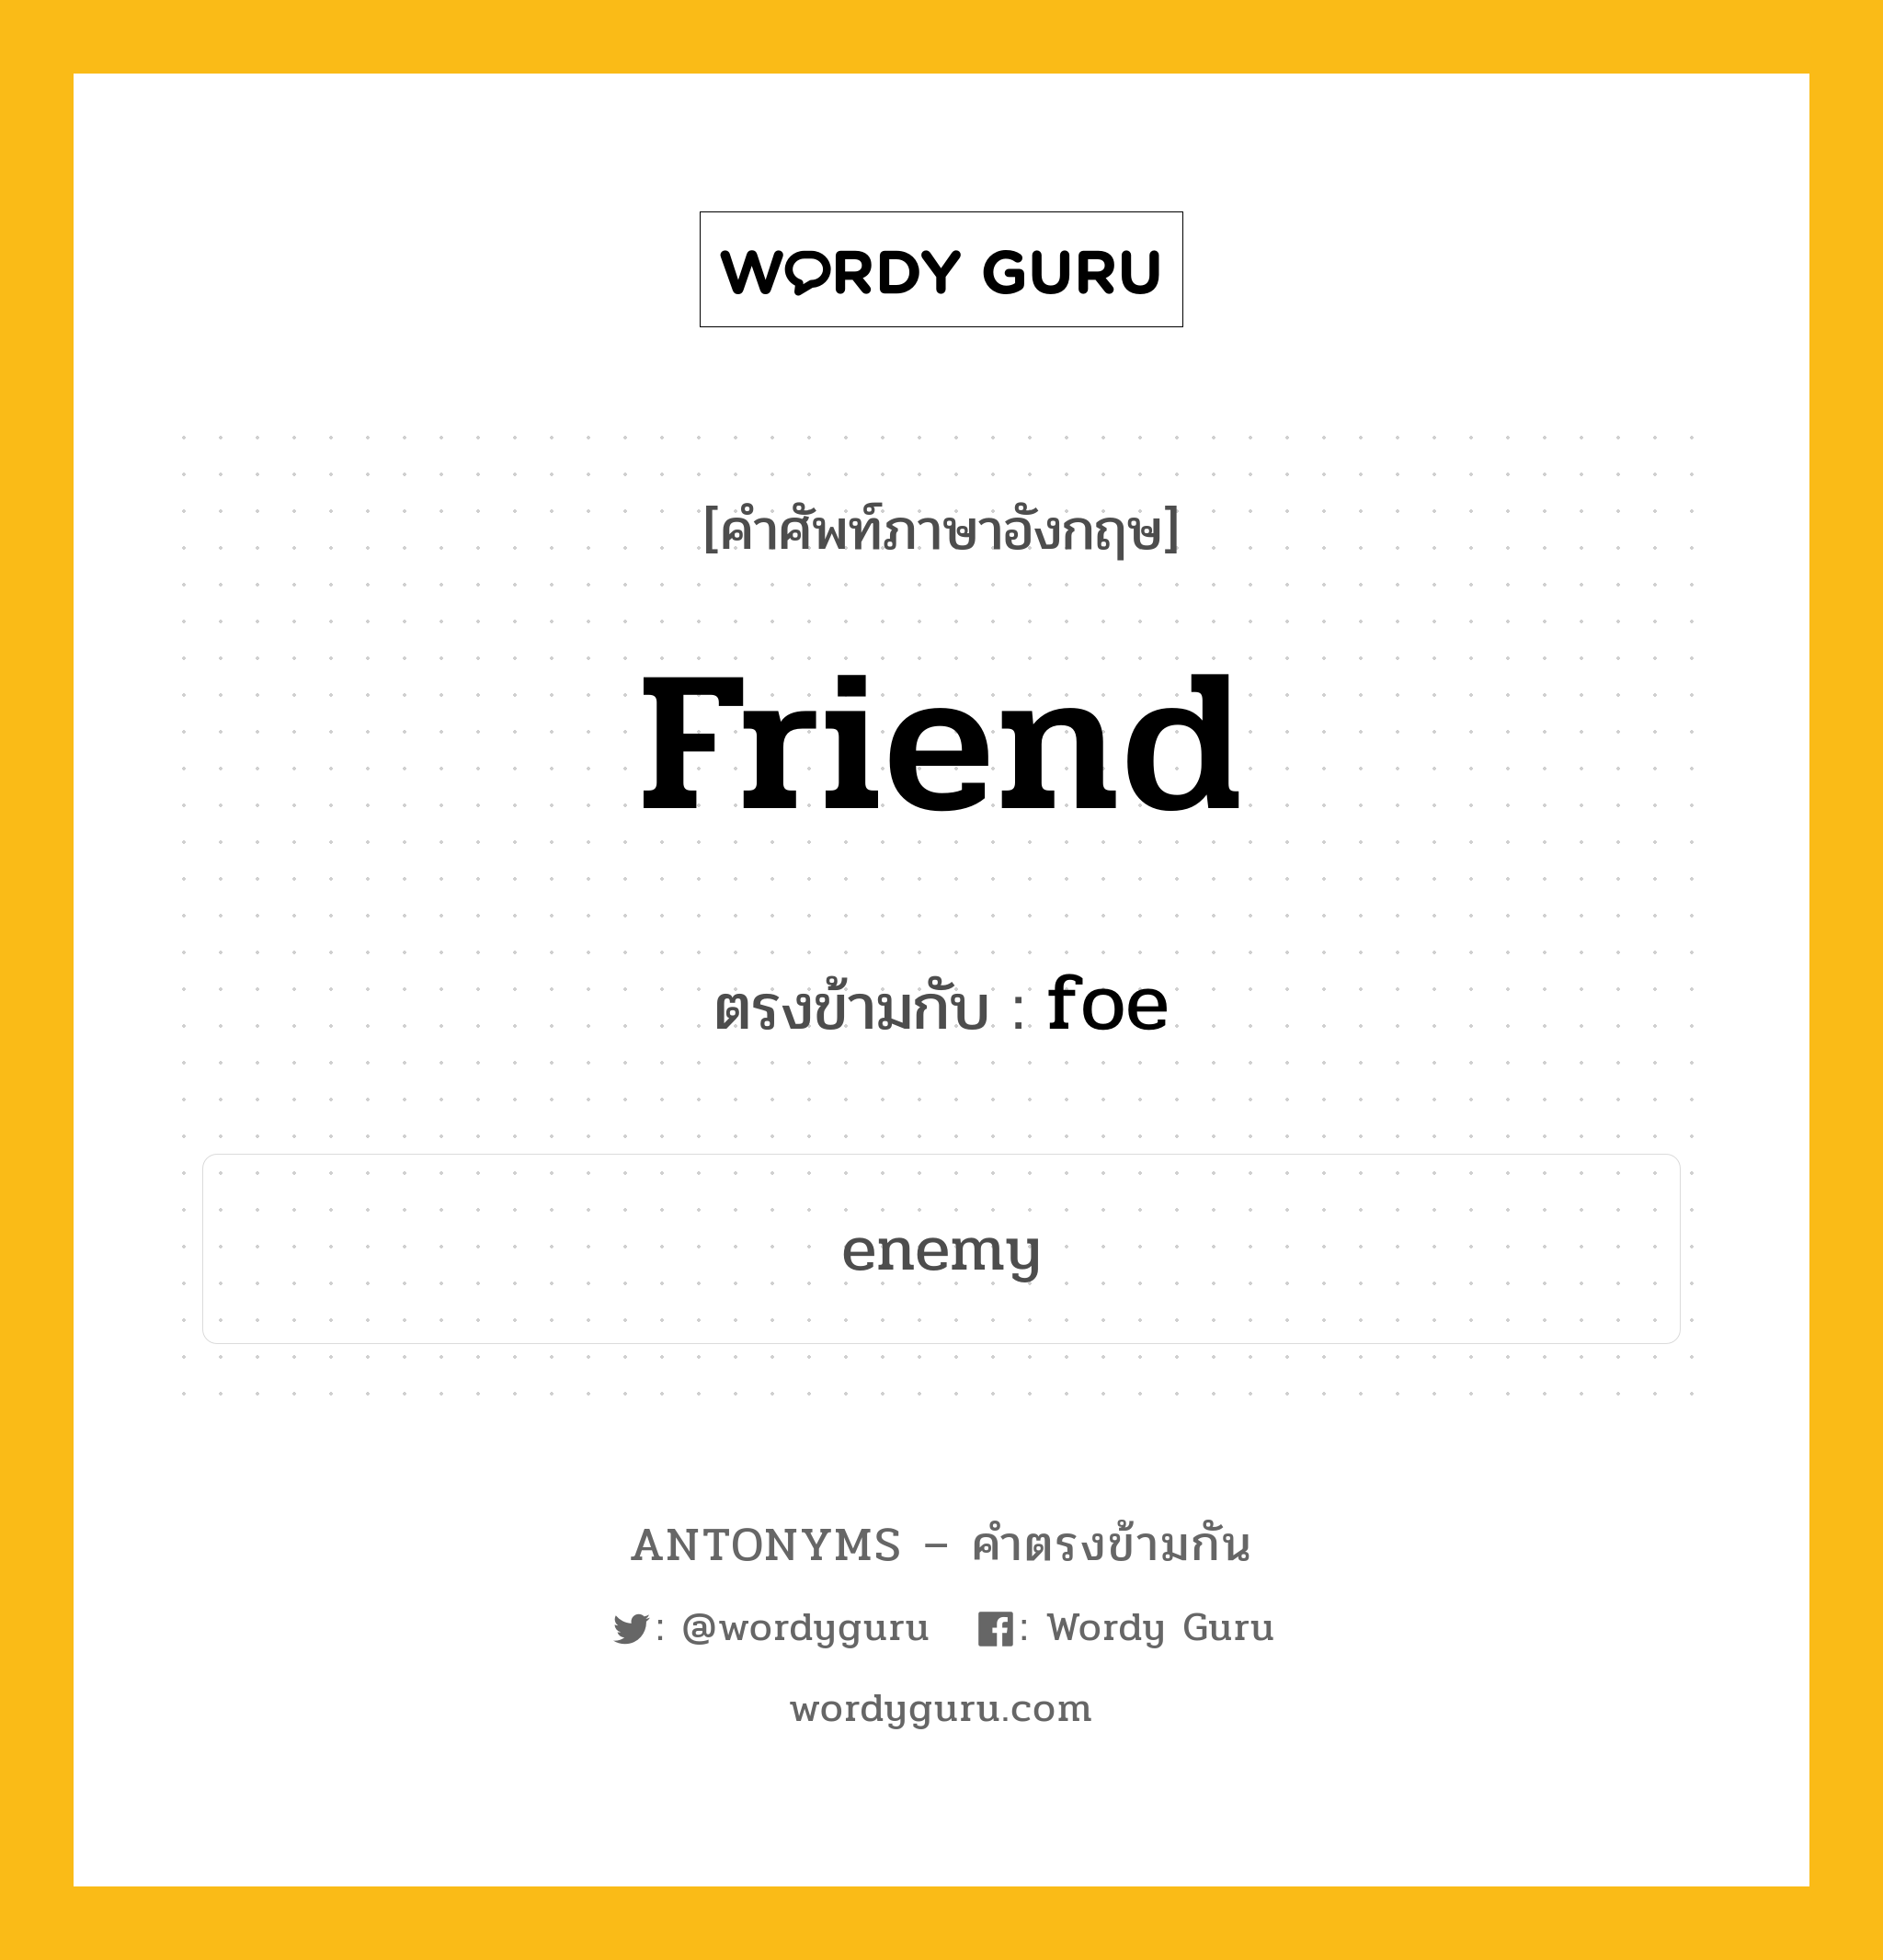 friend เป็นคำตรงข้ามกับคำไหนบ้าง?, คำศัพท์ภาษาอังกฤษ friend ตรงข้ามกับ foe หมวด foe